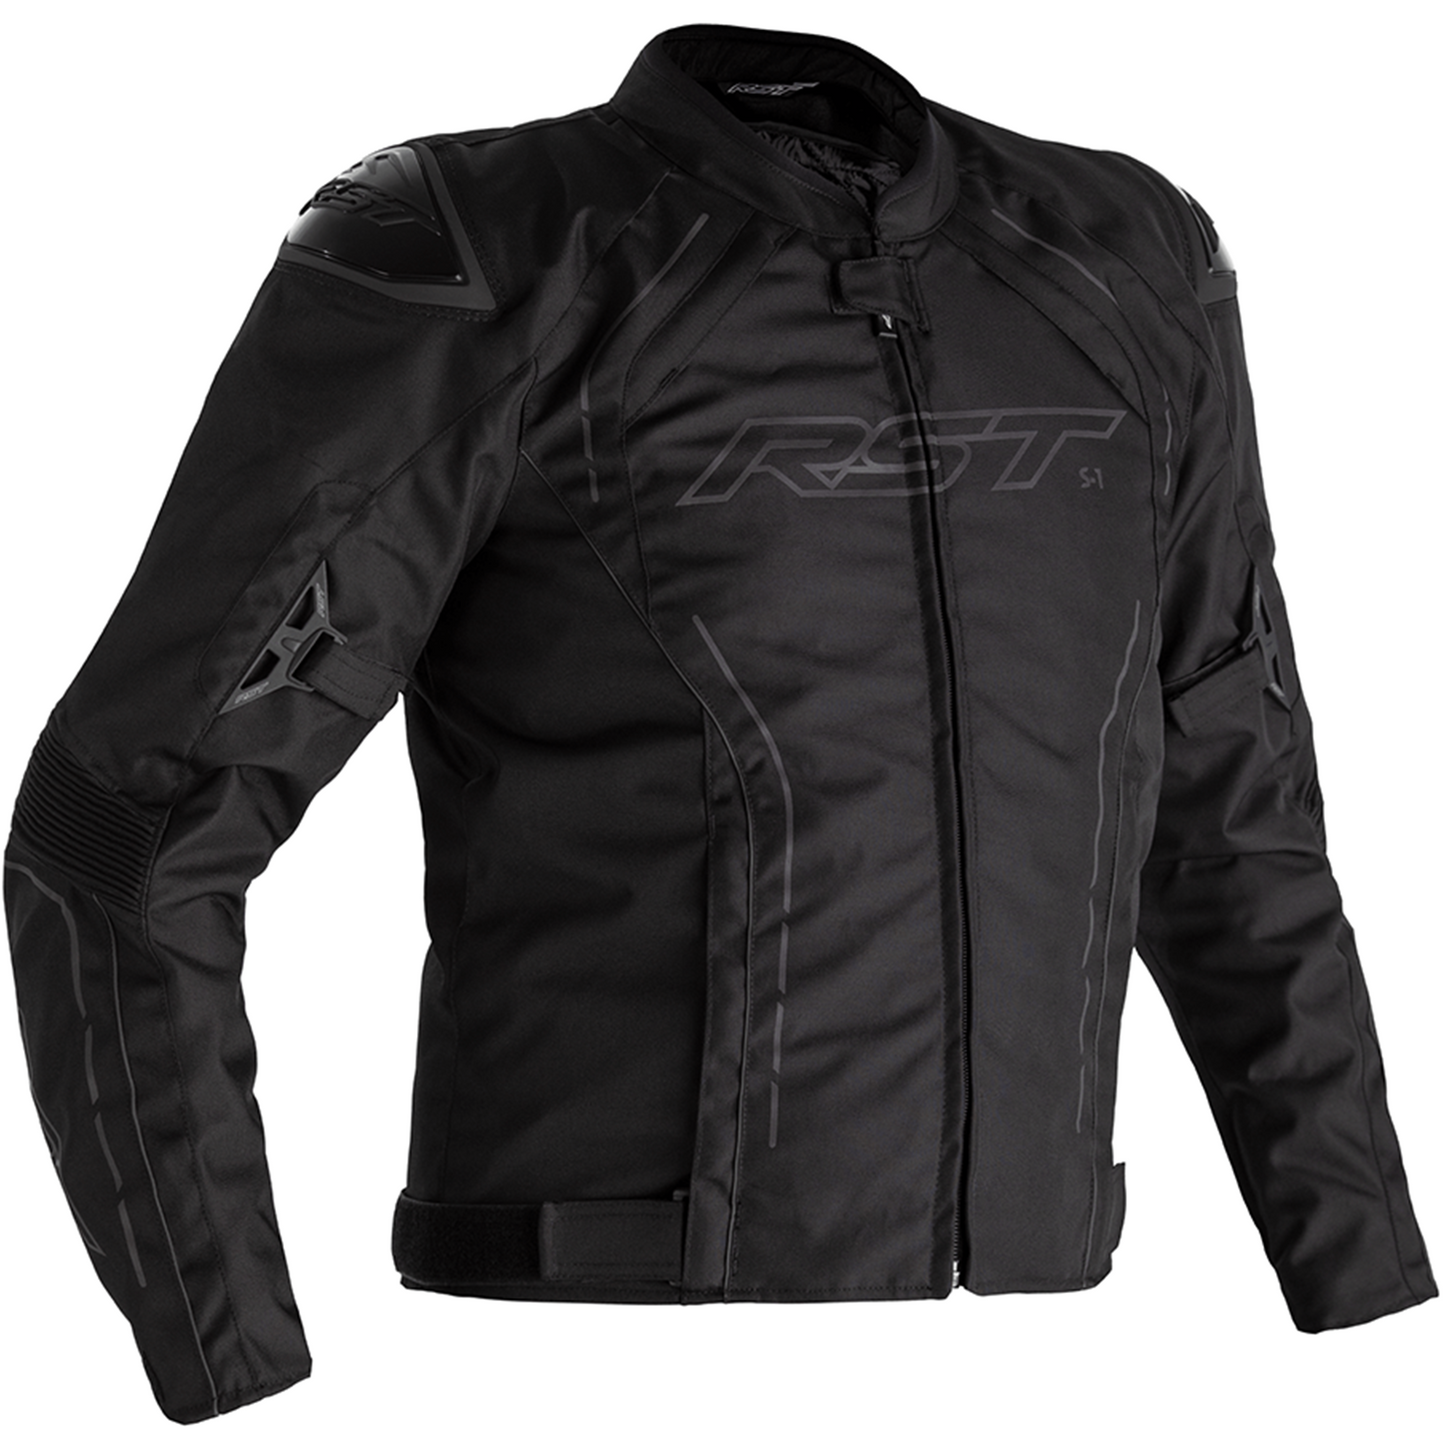 RST S1 (CE) Textile Jacket - Black (2559)